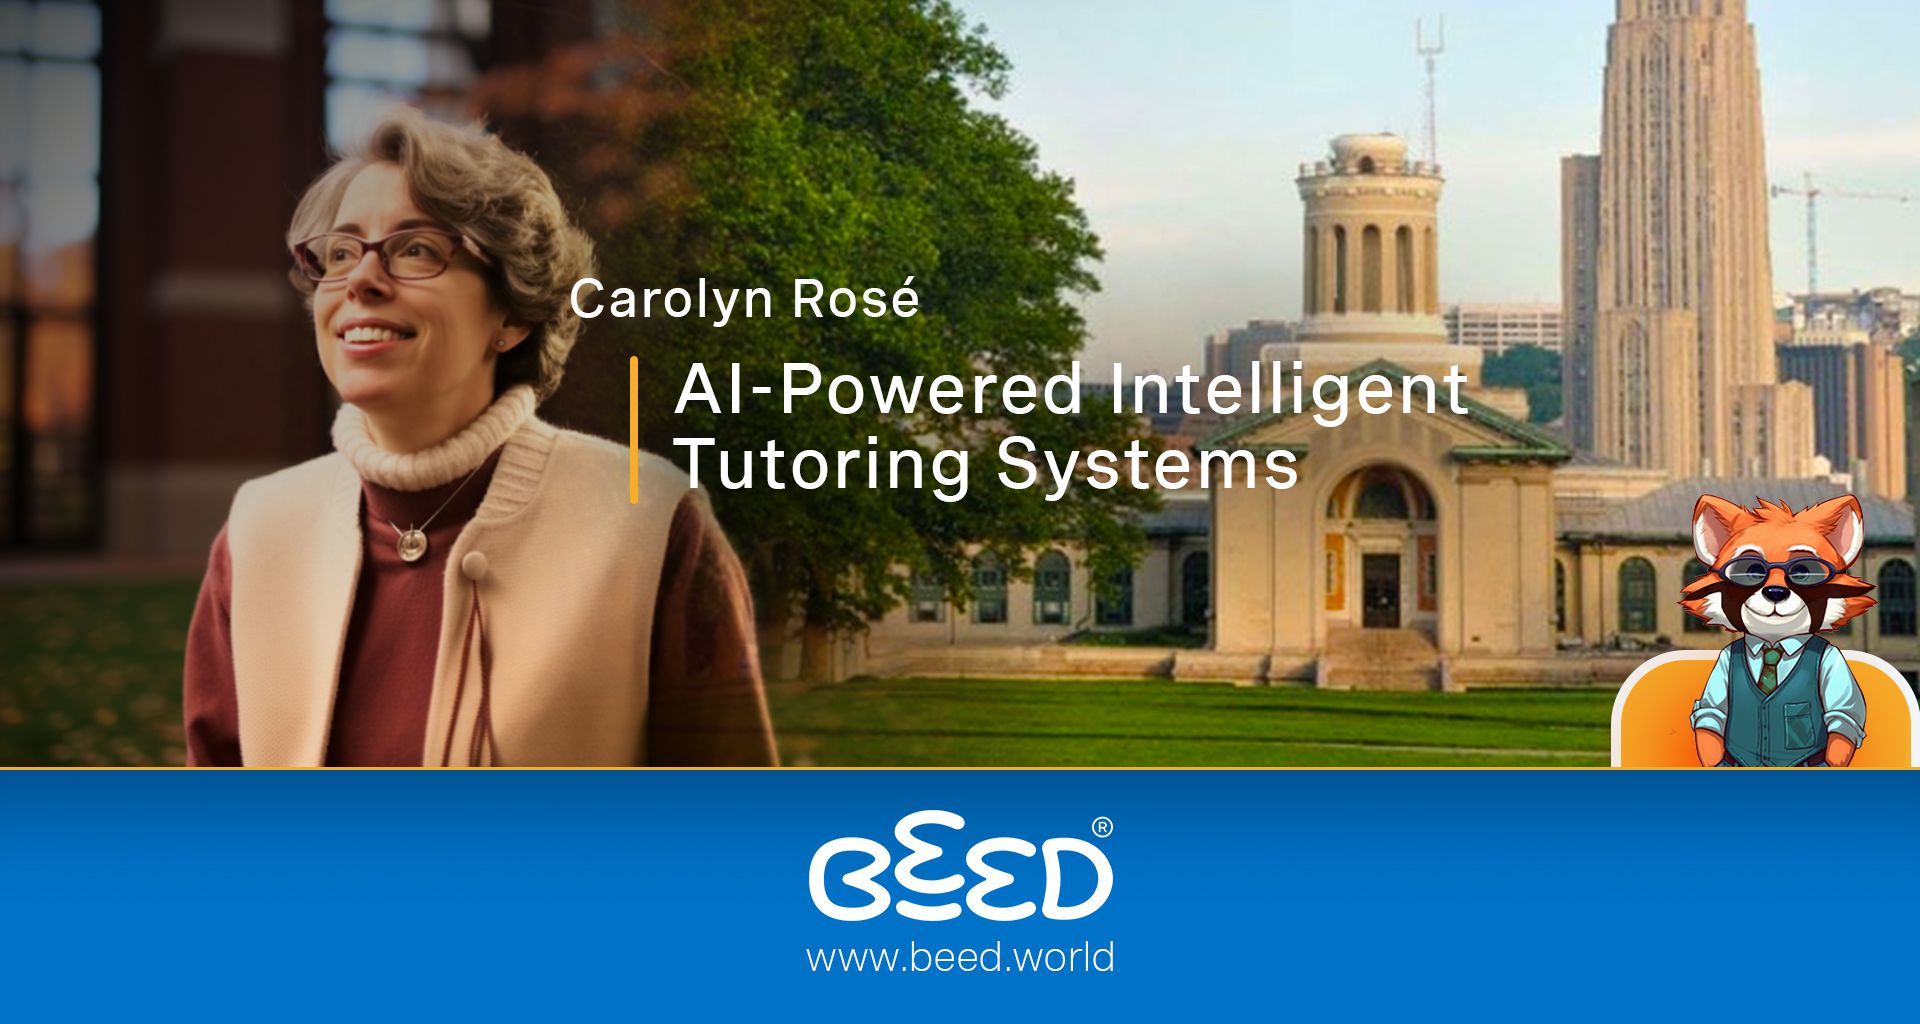 AI-Powered Intelligent Tutoring Systems and
Carolyn Rosé (Carnegie Mellon University)